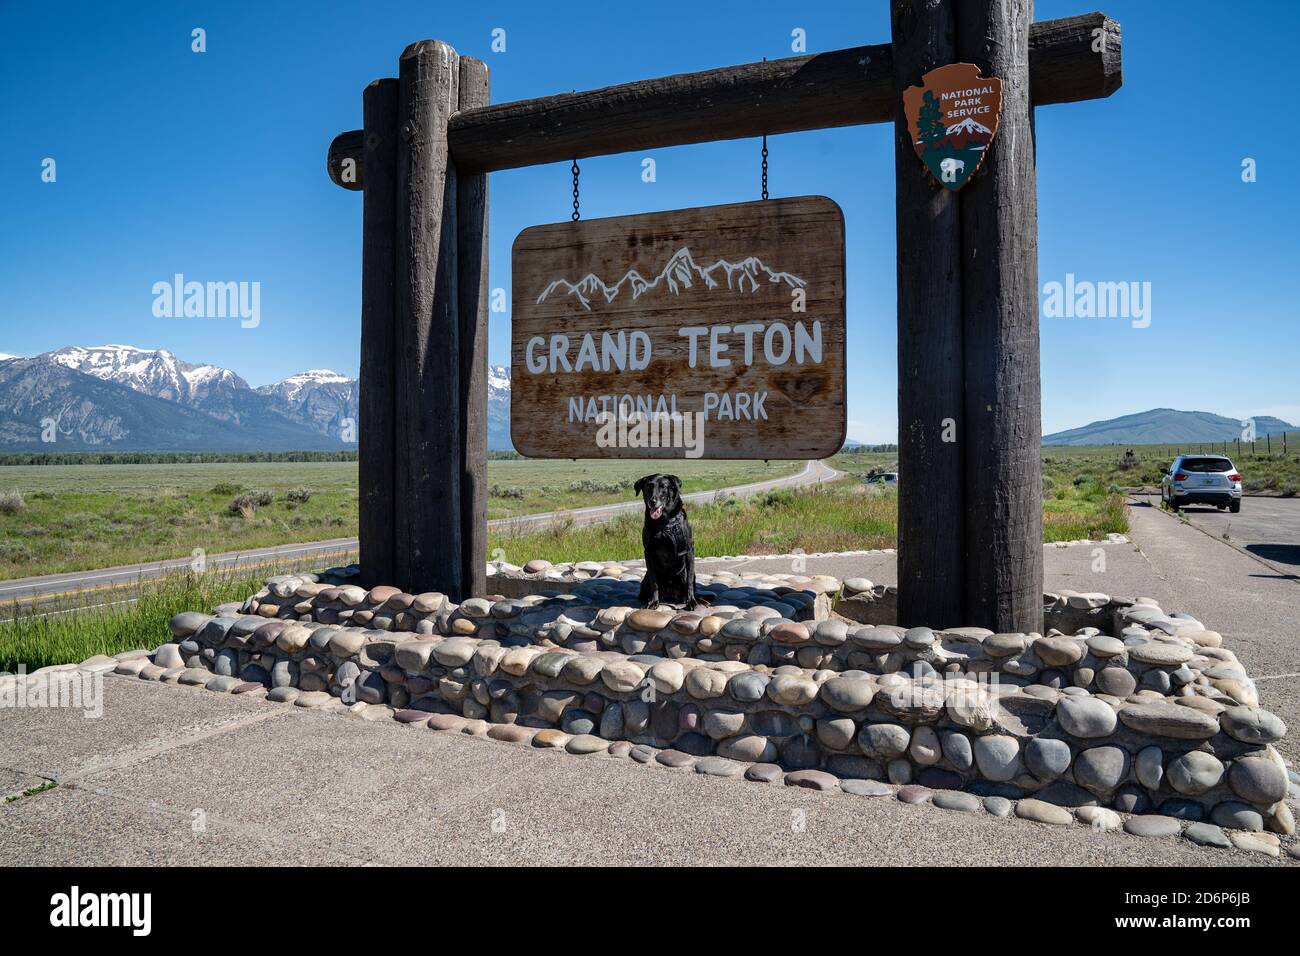 Jackson, Wyoming - June 27, 2020: A black labrador retreiver dog poses at the Grand Teton National Park sign Stock Photo